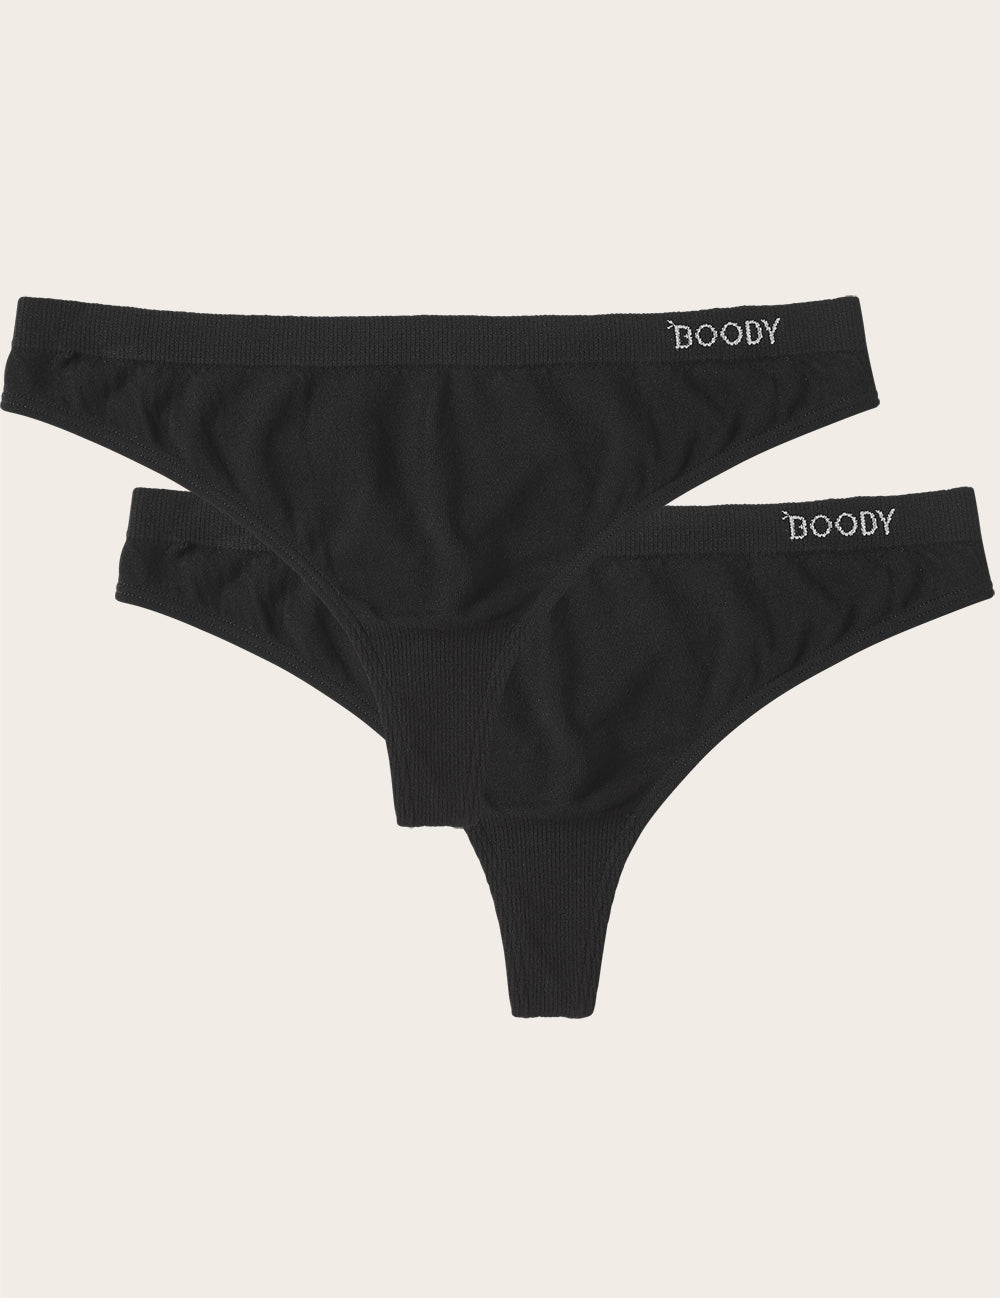 Boody Bamboo 2-pack of G-String Women's Underwear in Black